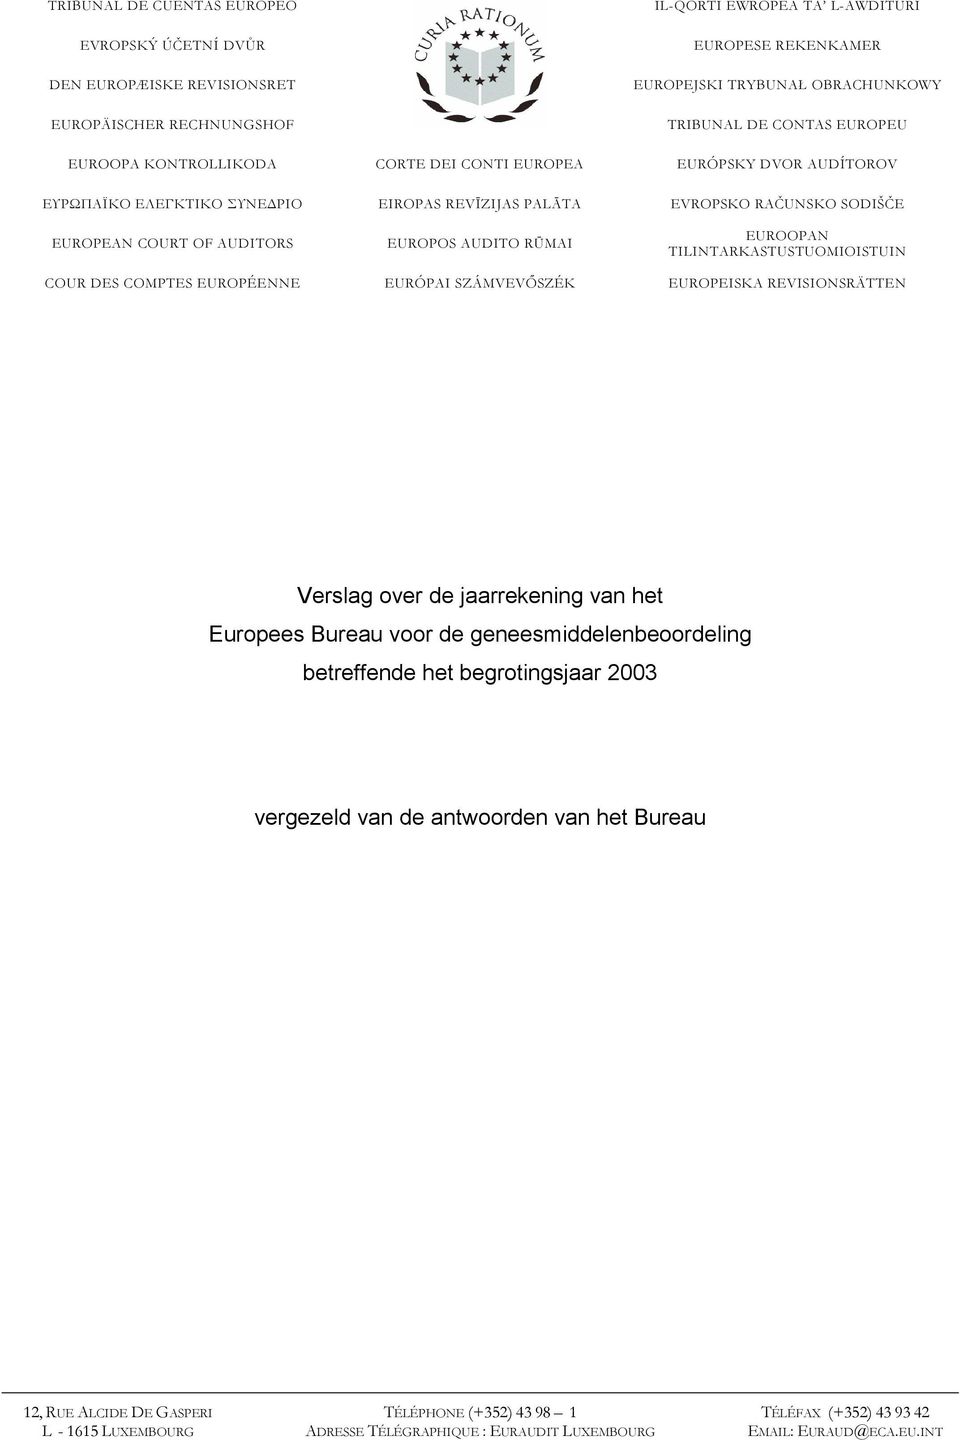 AUDITO RŪMAI EUROOPAN TILINTARKASTUSTUOMIOISTUIN COUR DES COMPTES EUROPÉENNE EURÓPAI SZÁMVEVİSZÉK EUROPEISKA REVISIONSRÄTTEN Verslag over de jaarrekening van het Europees Bureau voor de